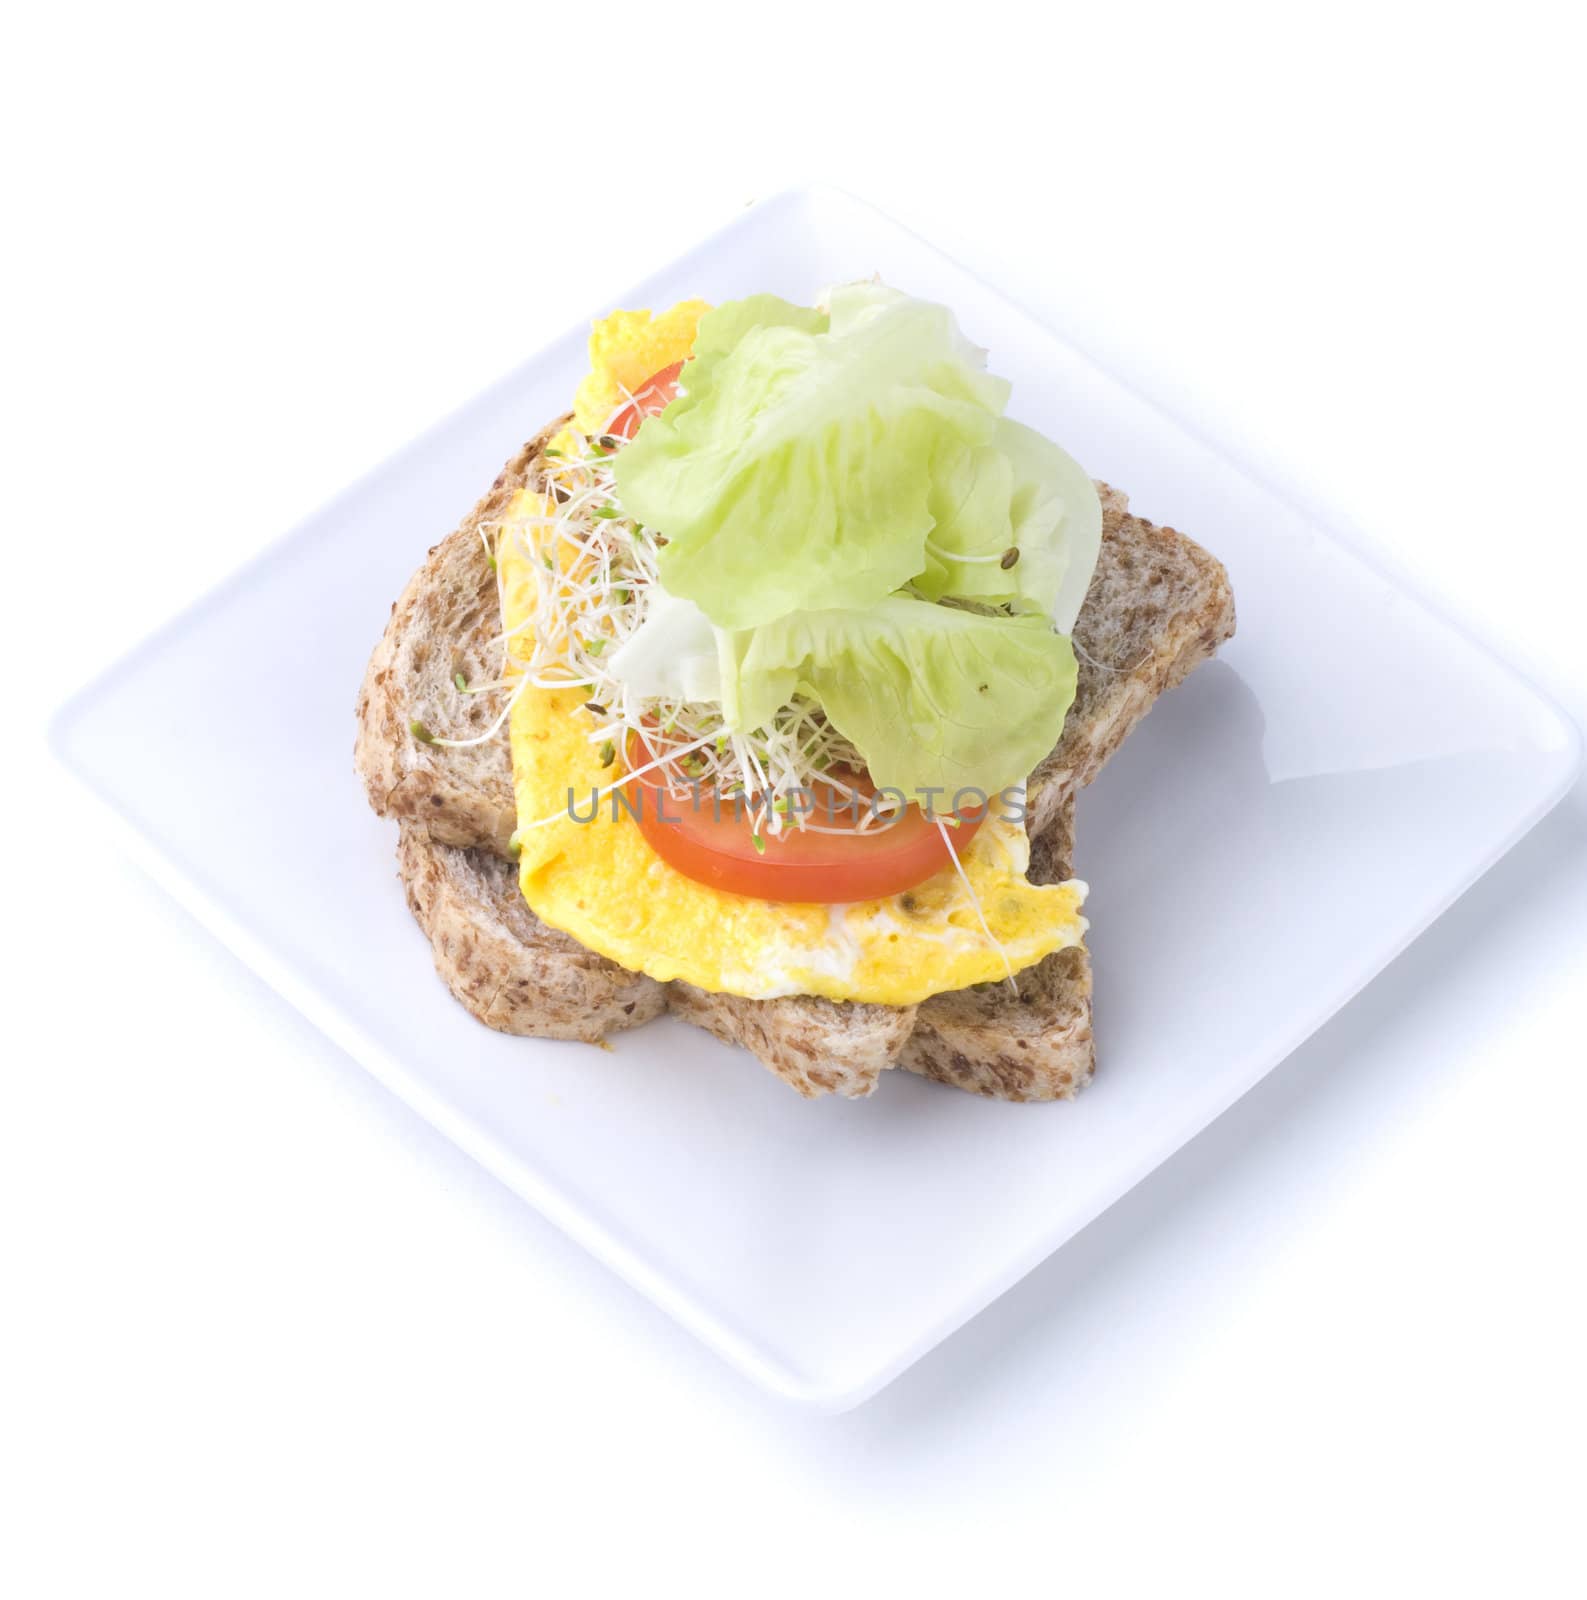 alfafa egg sandwich by yuliang11